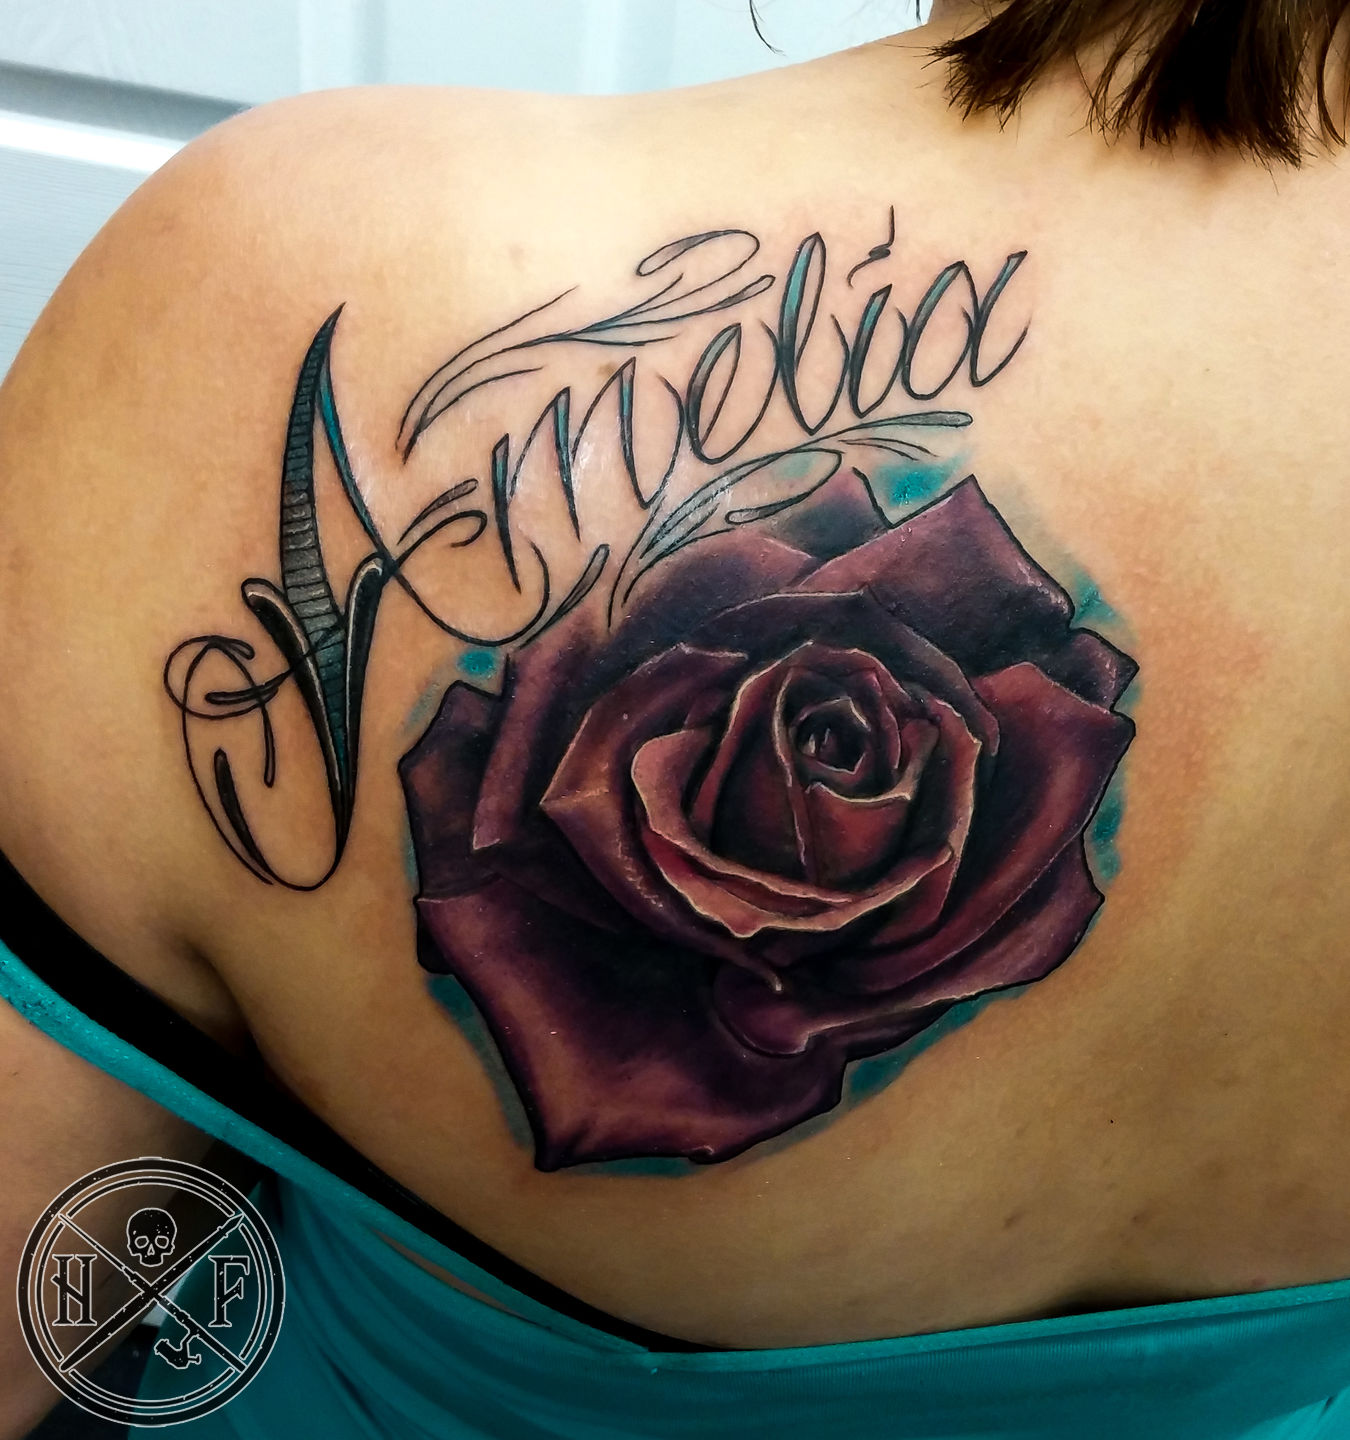 Supperb® Temporary Tattoos Rosebud Rose Blooming Arm Tattoo - Etsy Australia